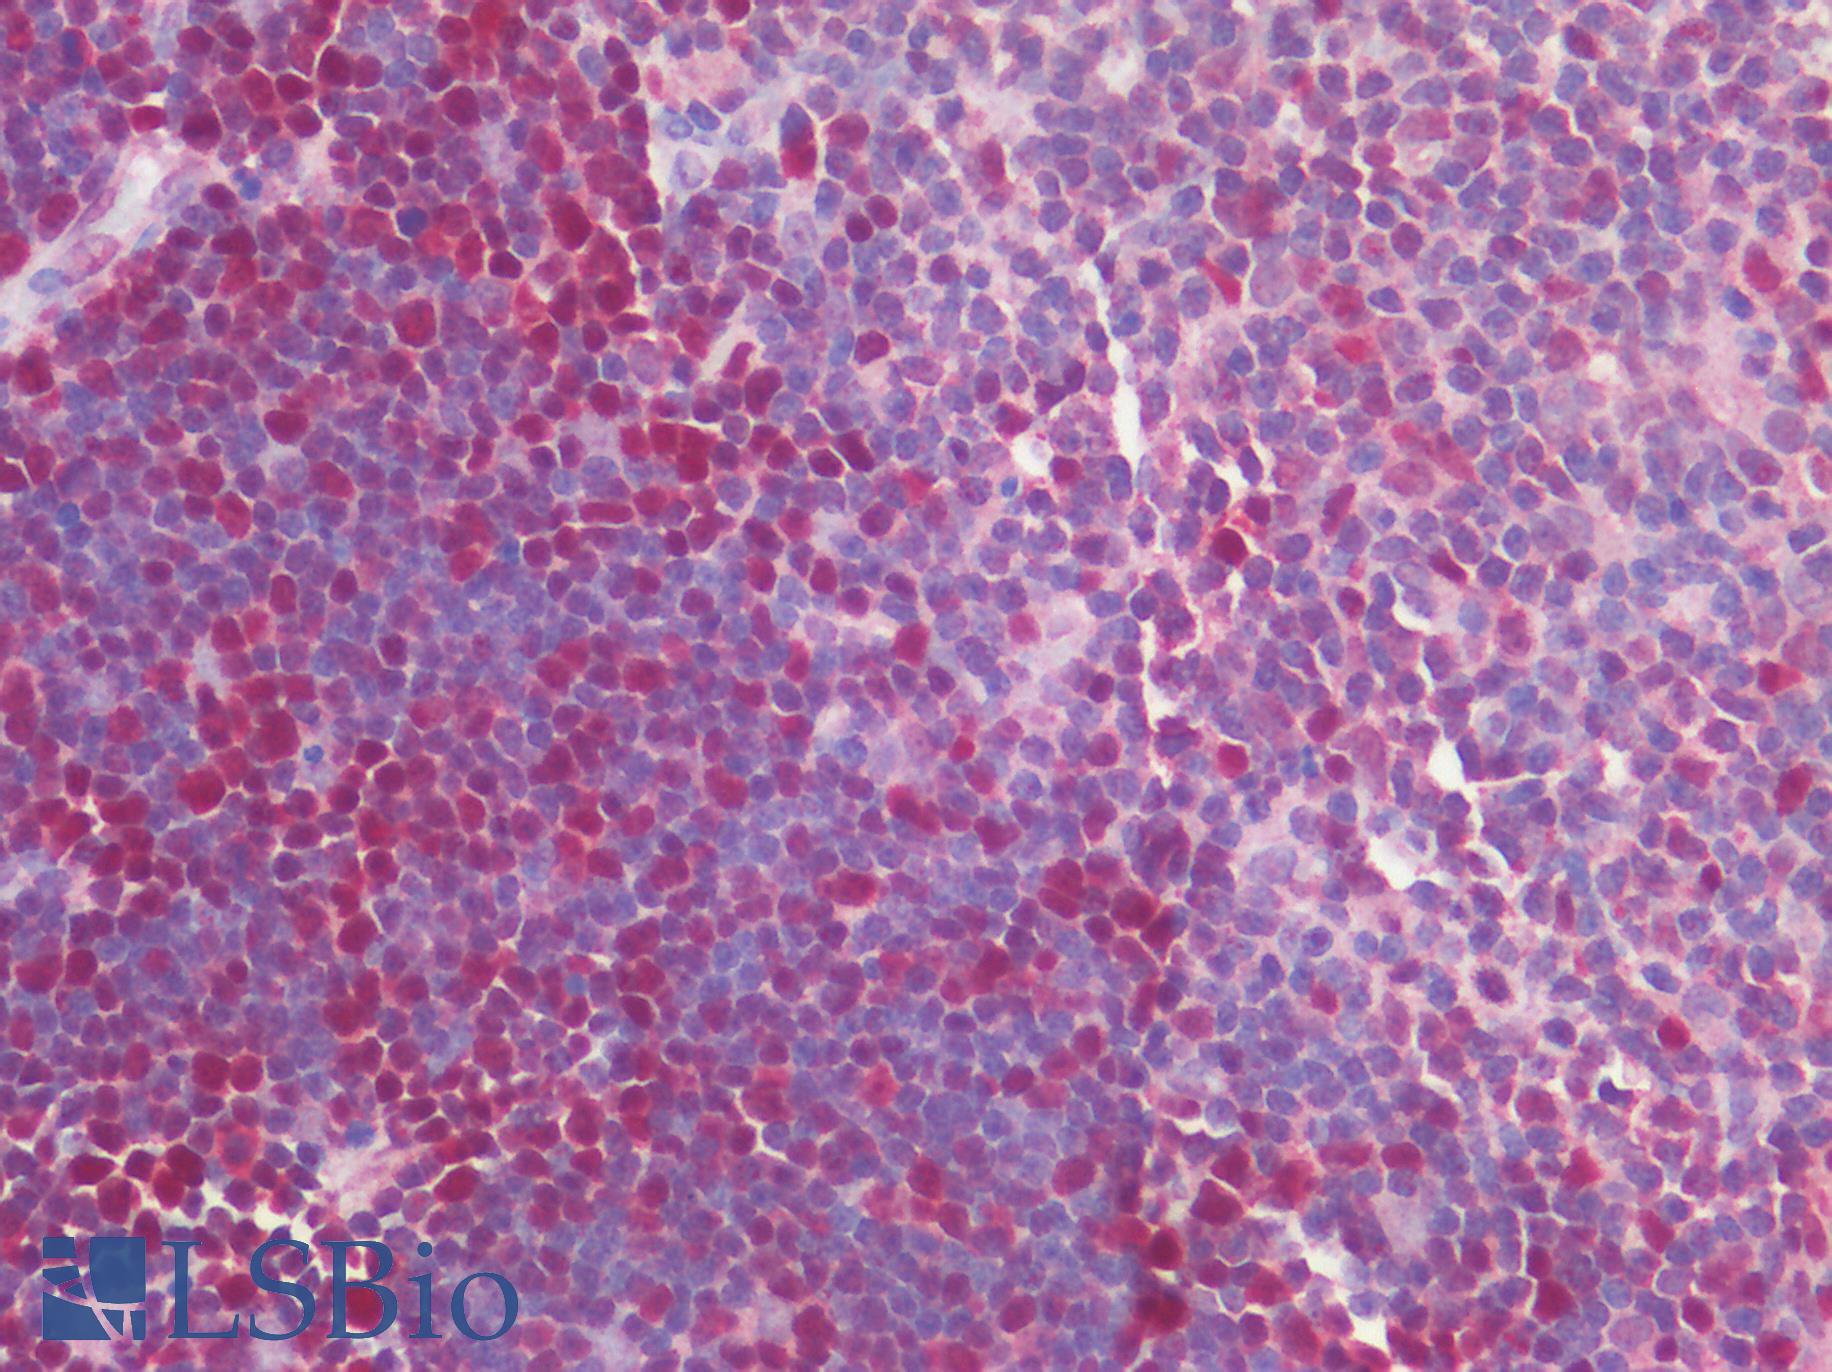 MCM4 Antibody - Human Thymus: Formalin-Fixed, Paraffin-Embedded (FFPE)